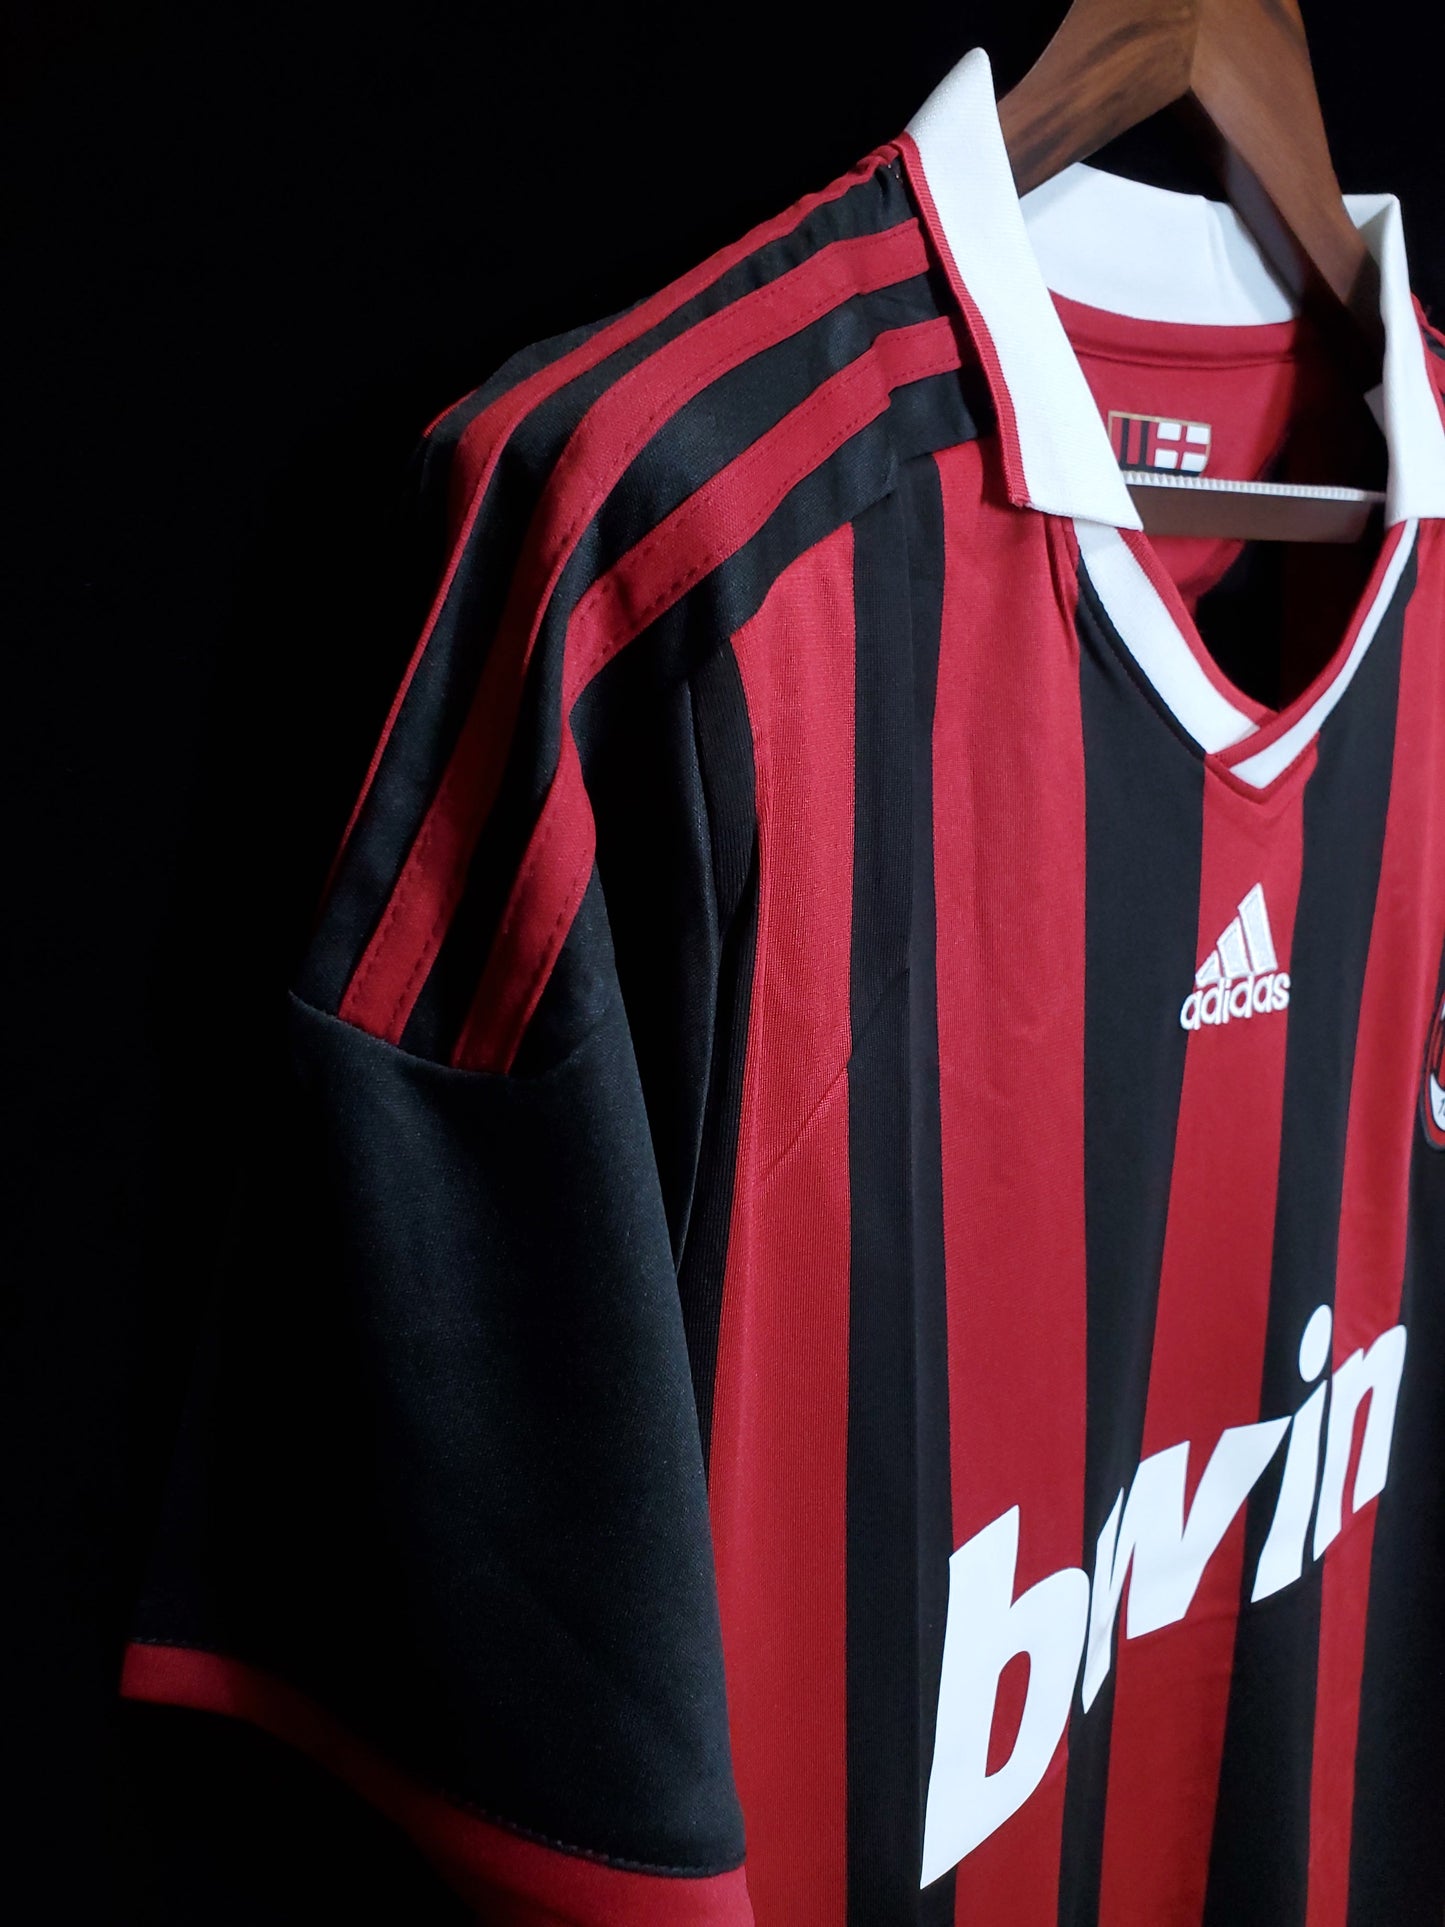 Retro AC Milan 09/10 Home Kit